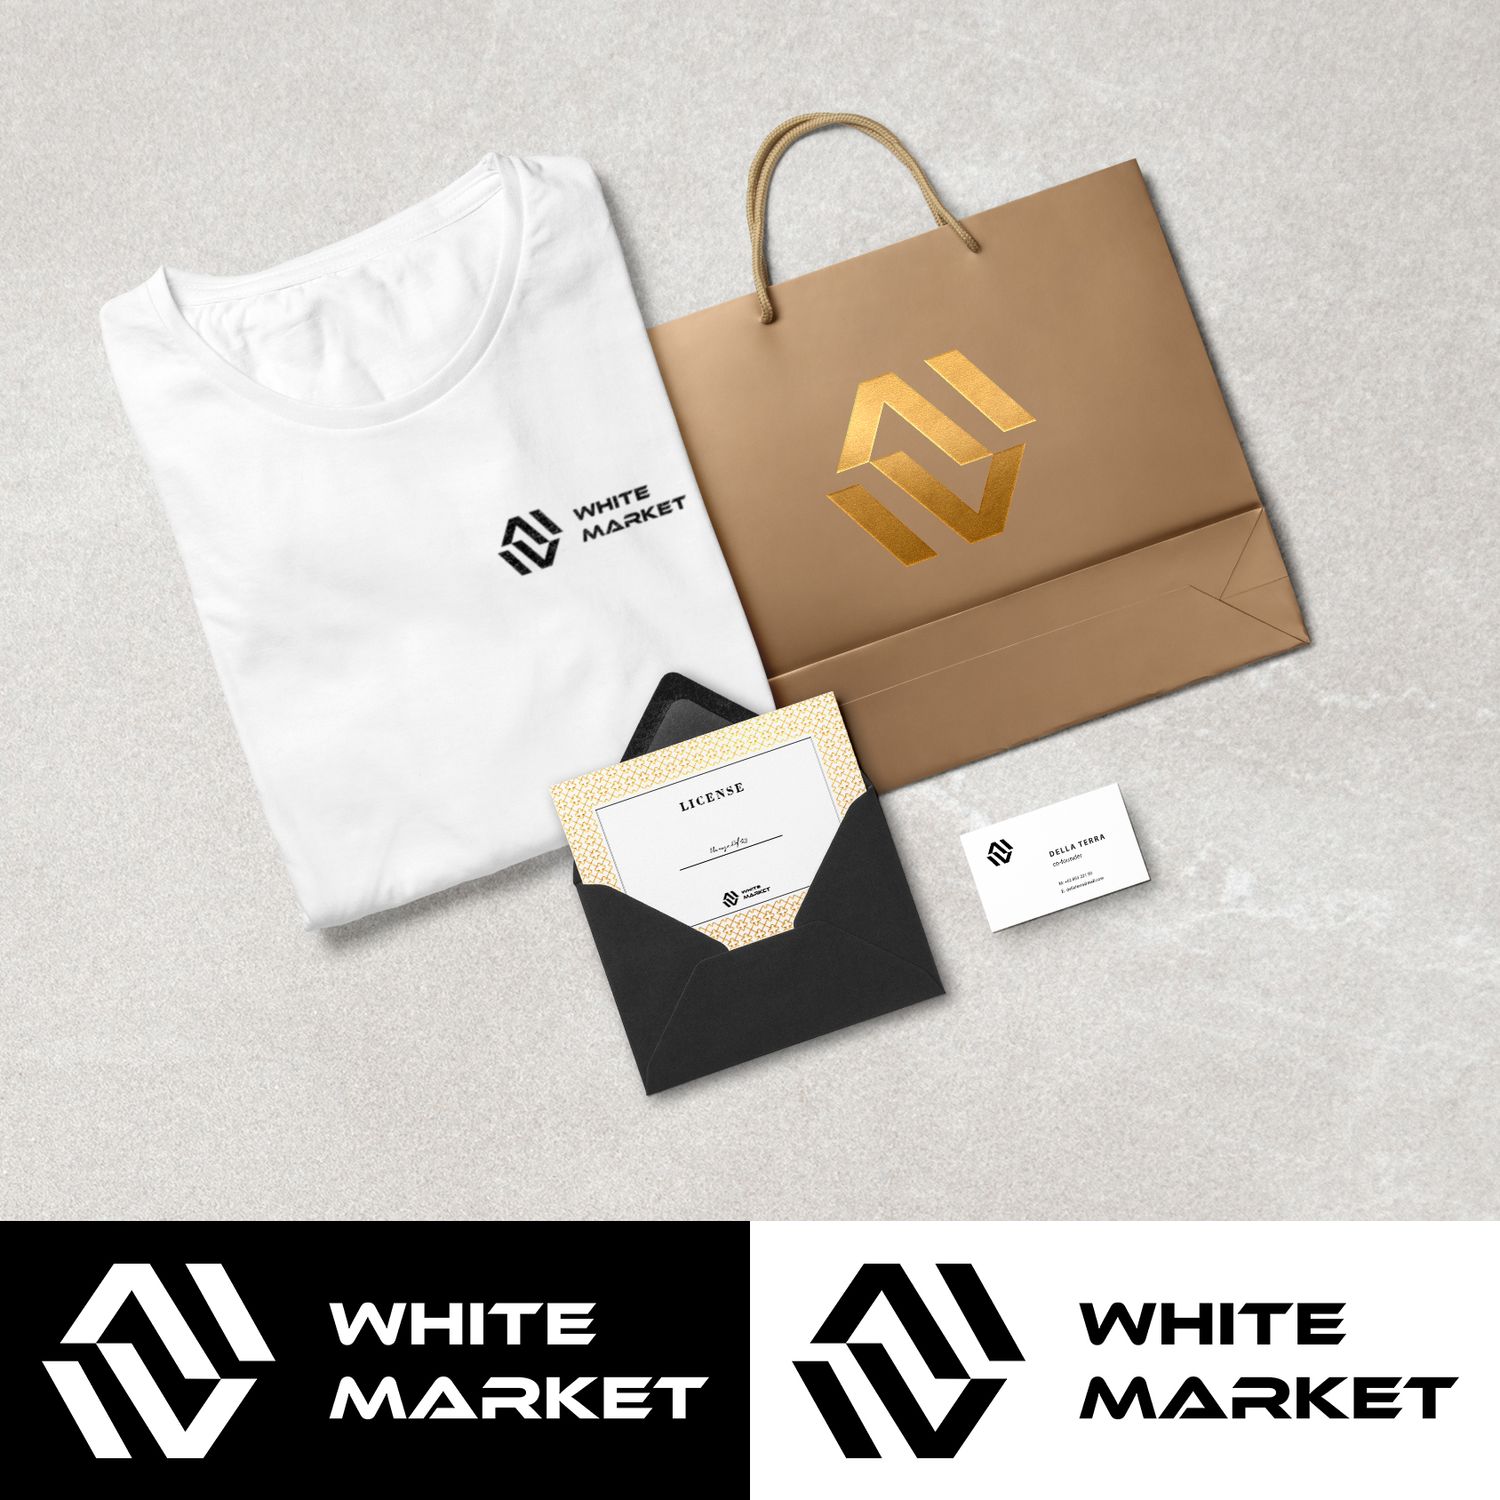 whitemarketgroup | Sign Up for LIMITED OFFER